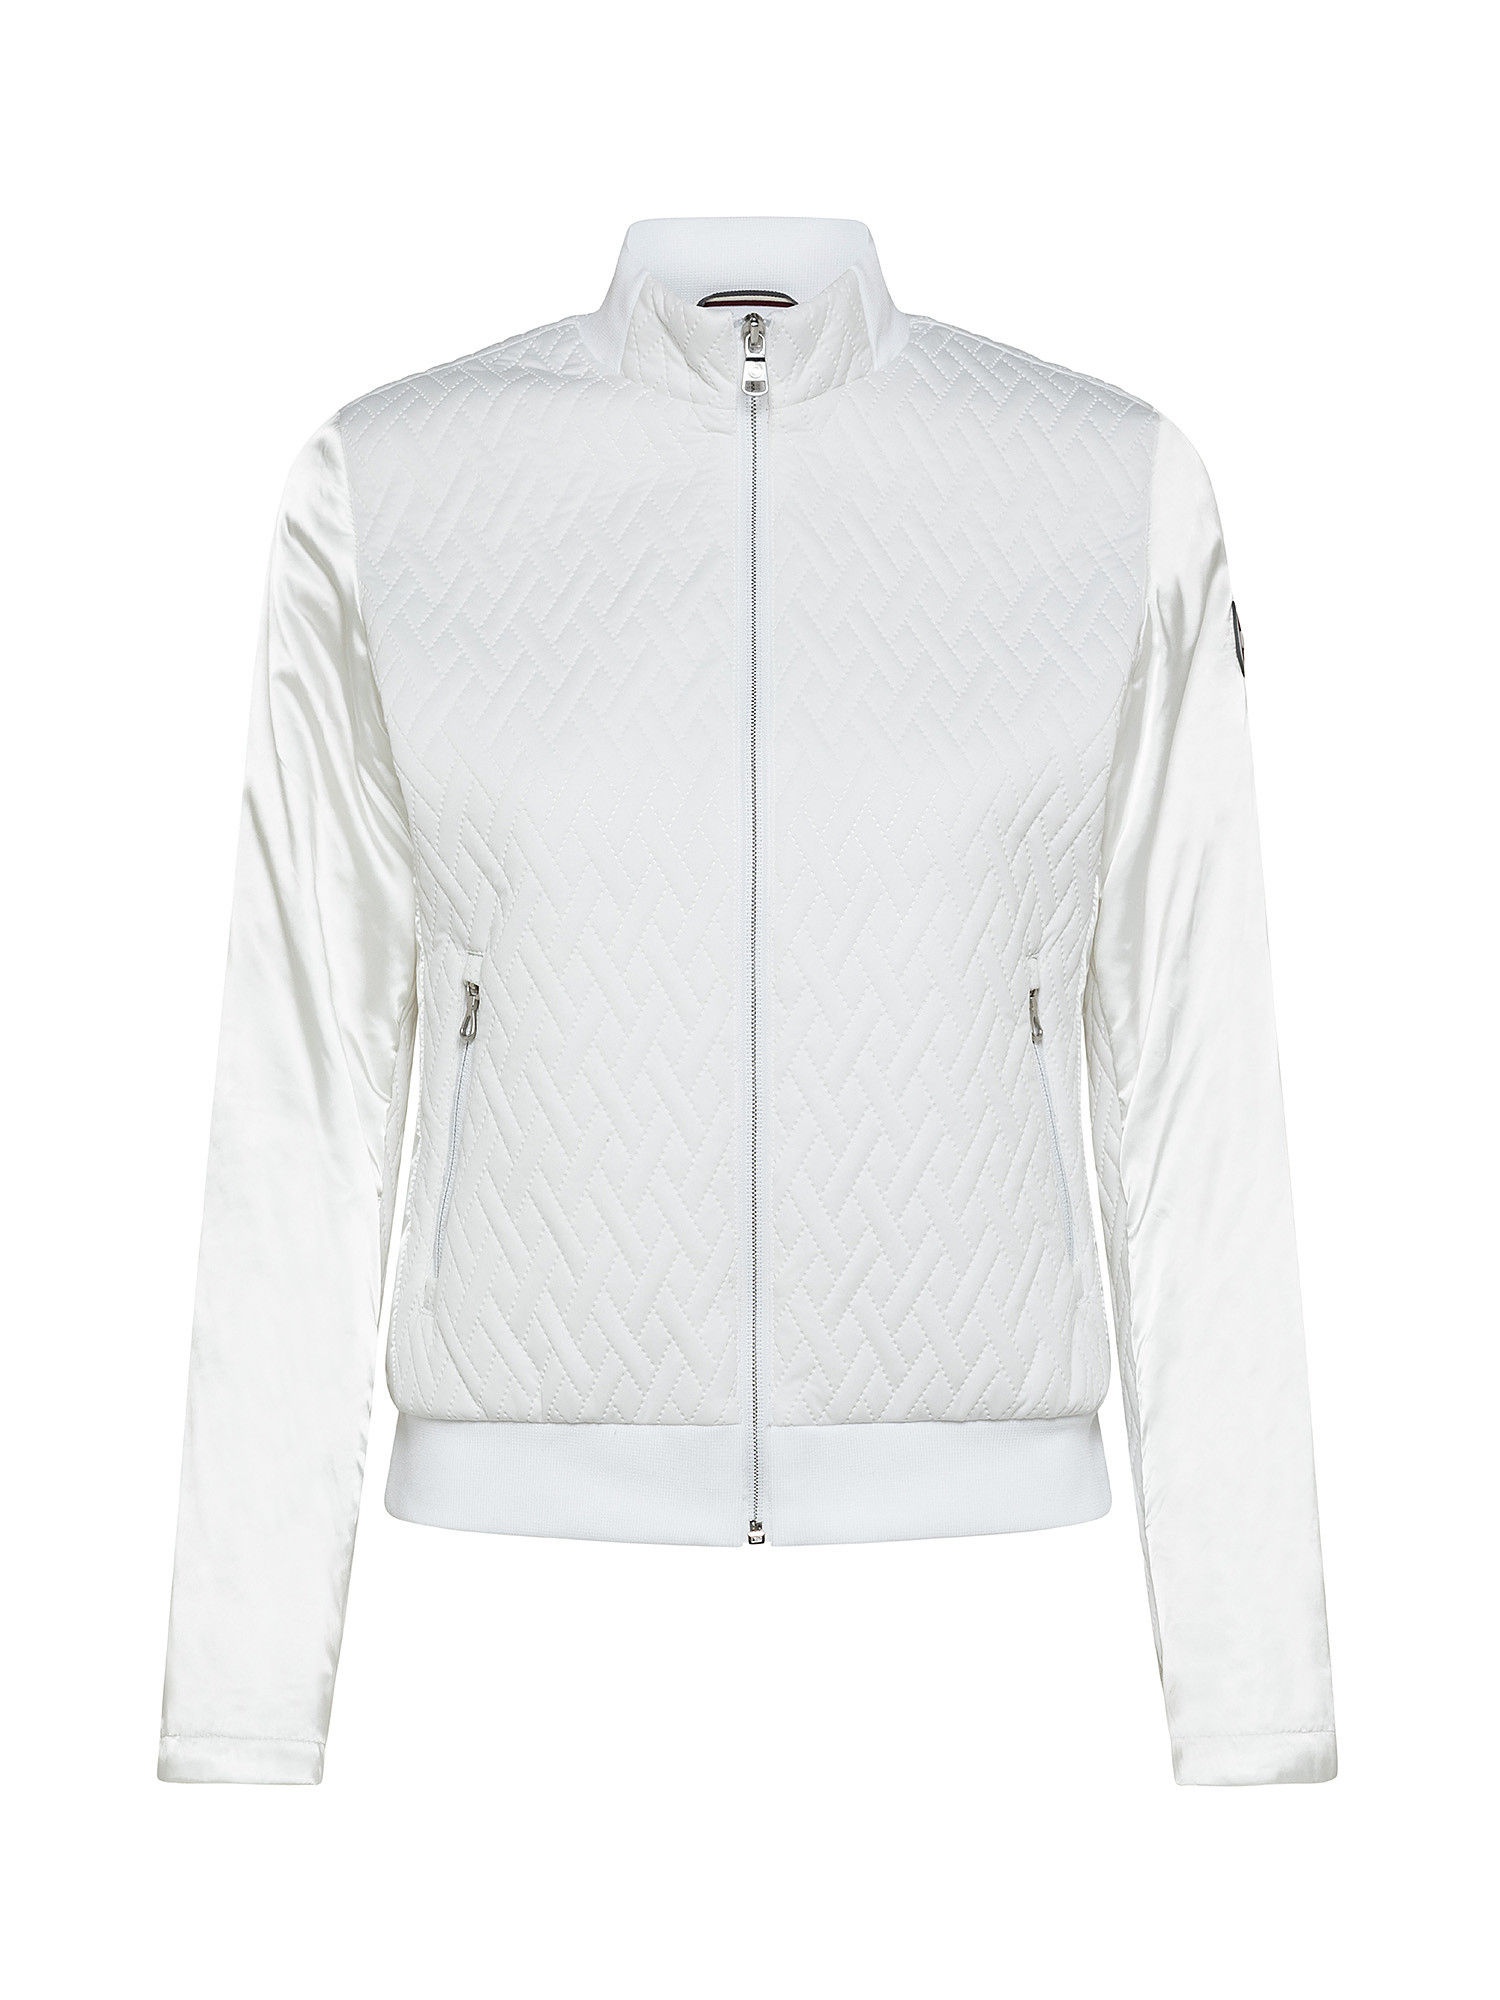 Jacket with inserts, White, large image number 0